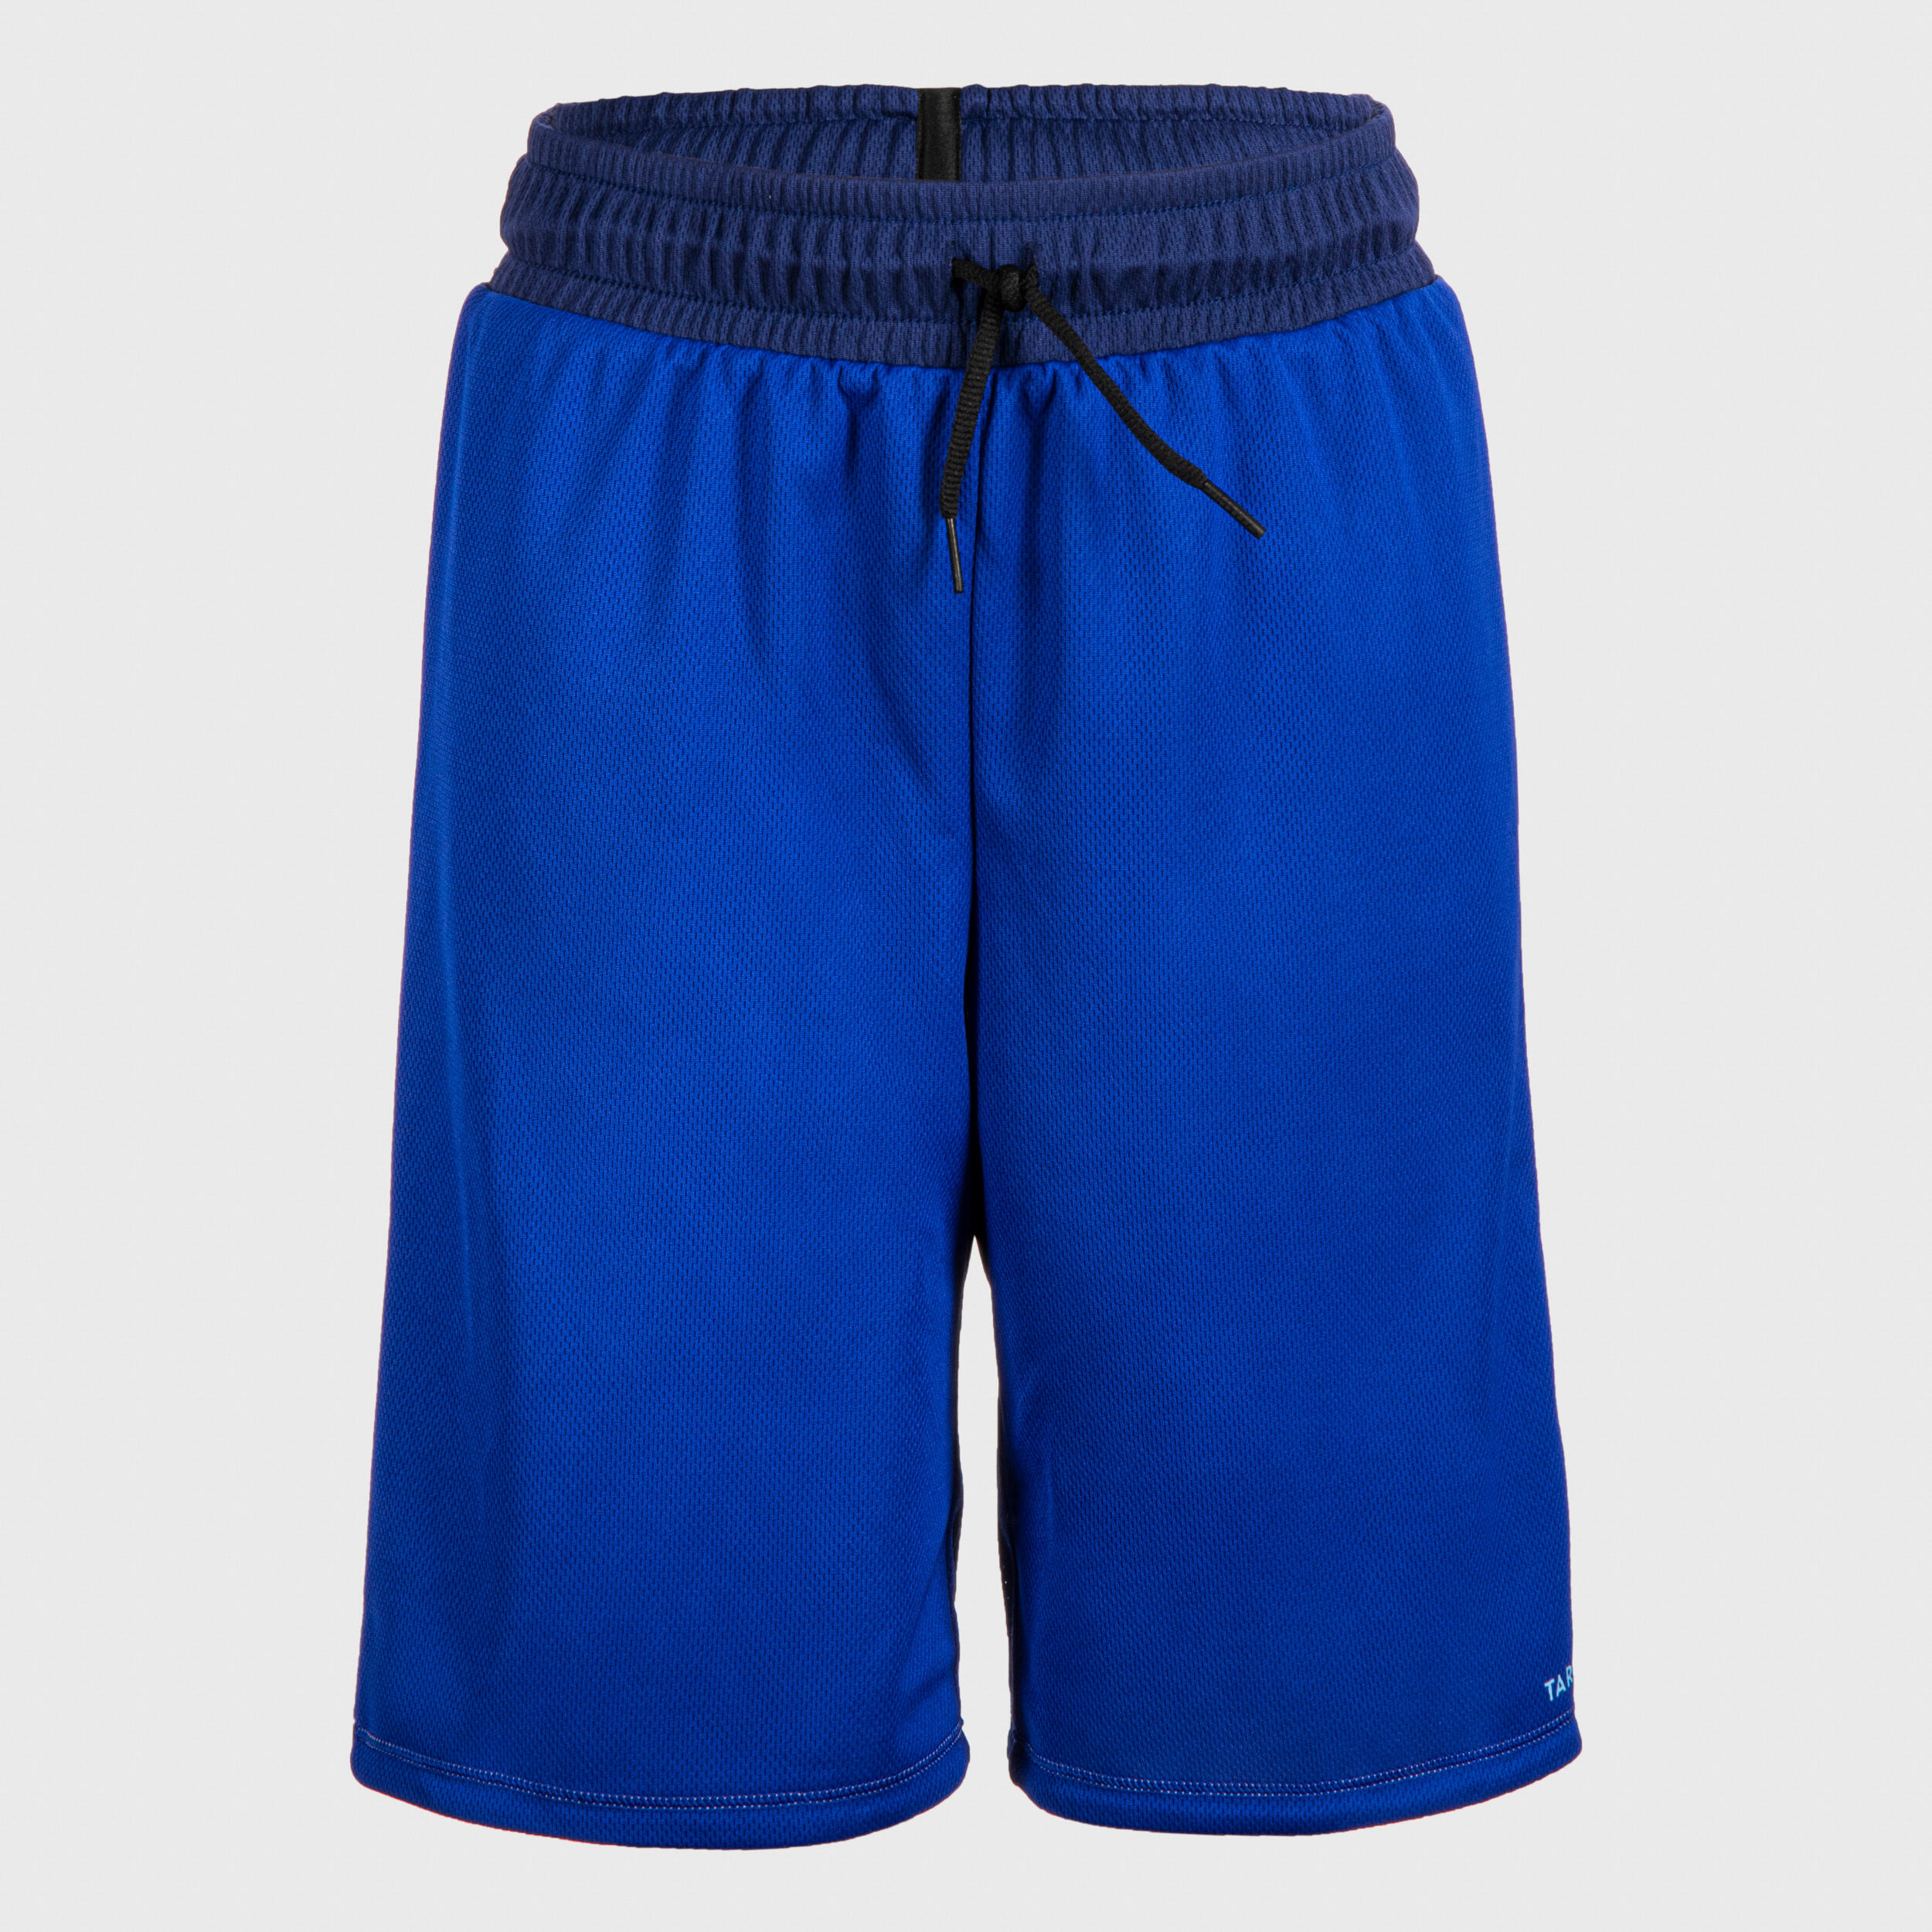 Kids' Reversible Basketball Shorts SH500R - Light Blue/Navy 9/11